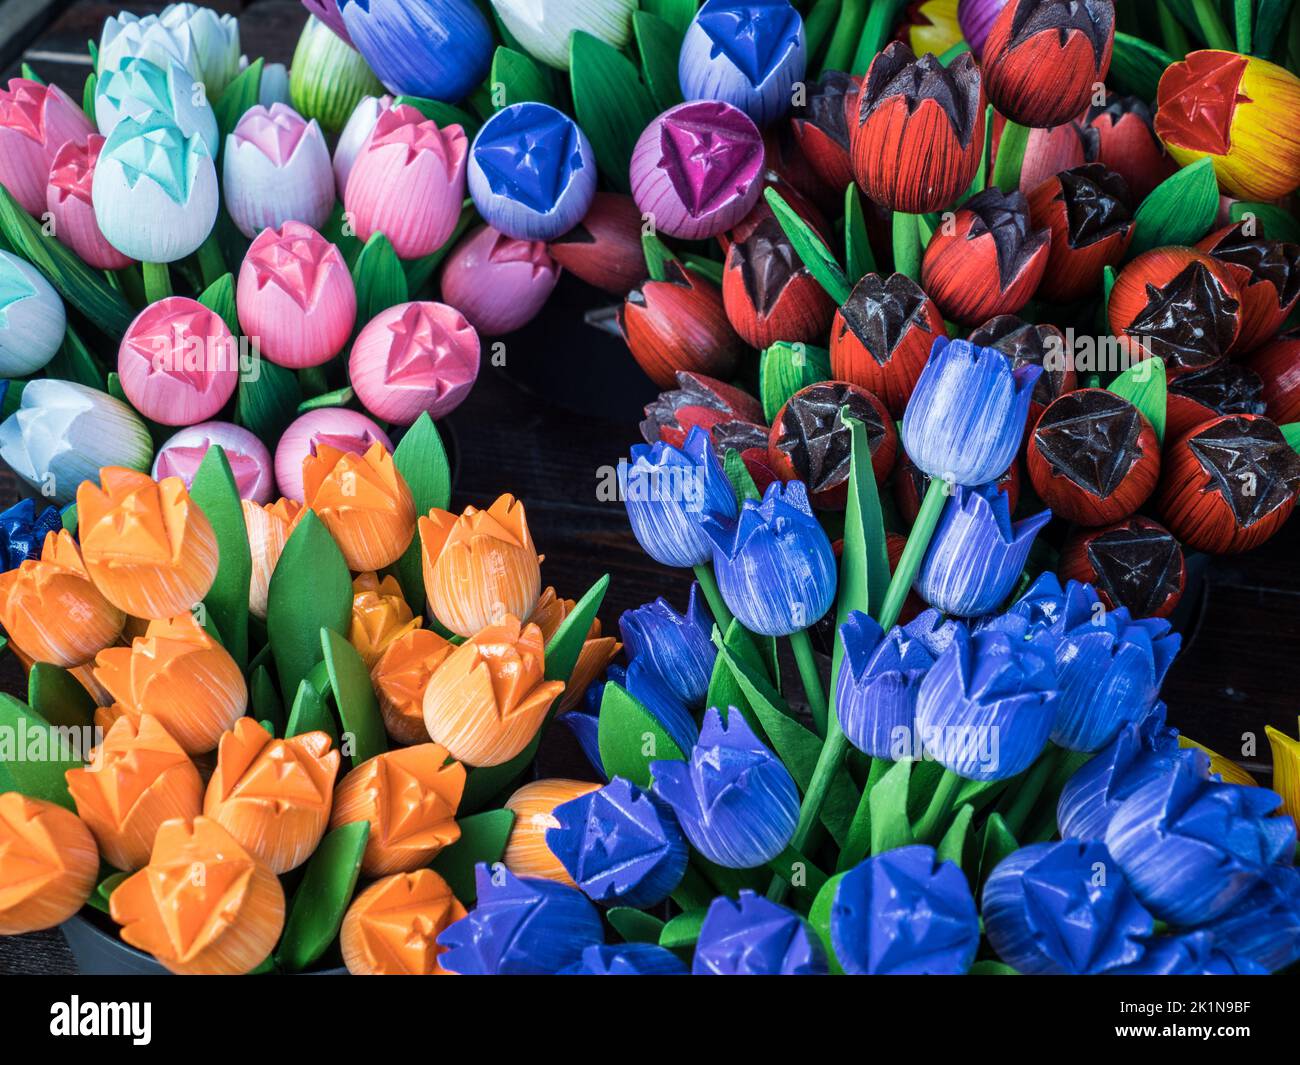 Wooden tulips on sale in Zaansche Schans, Holland Stock Photo